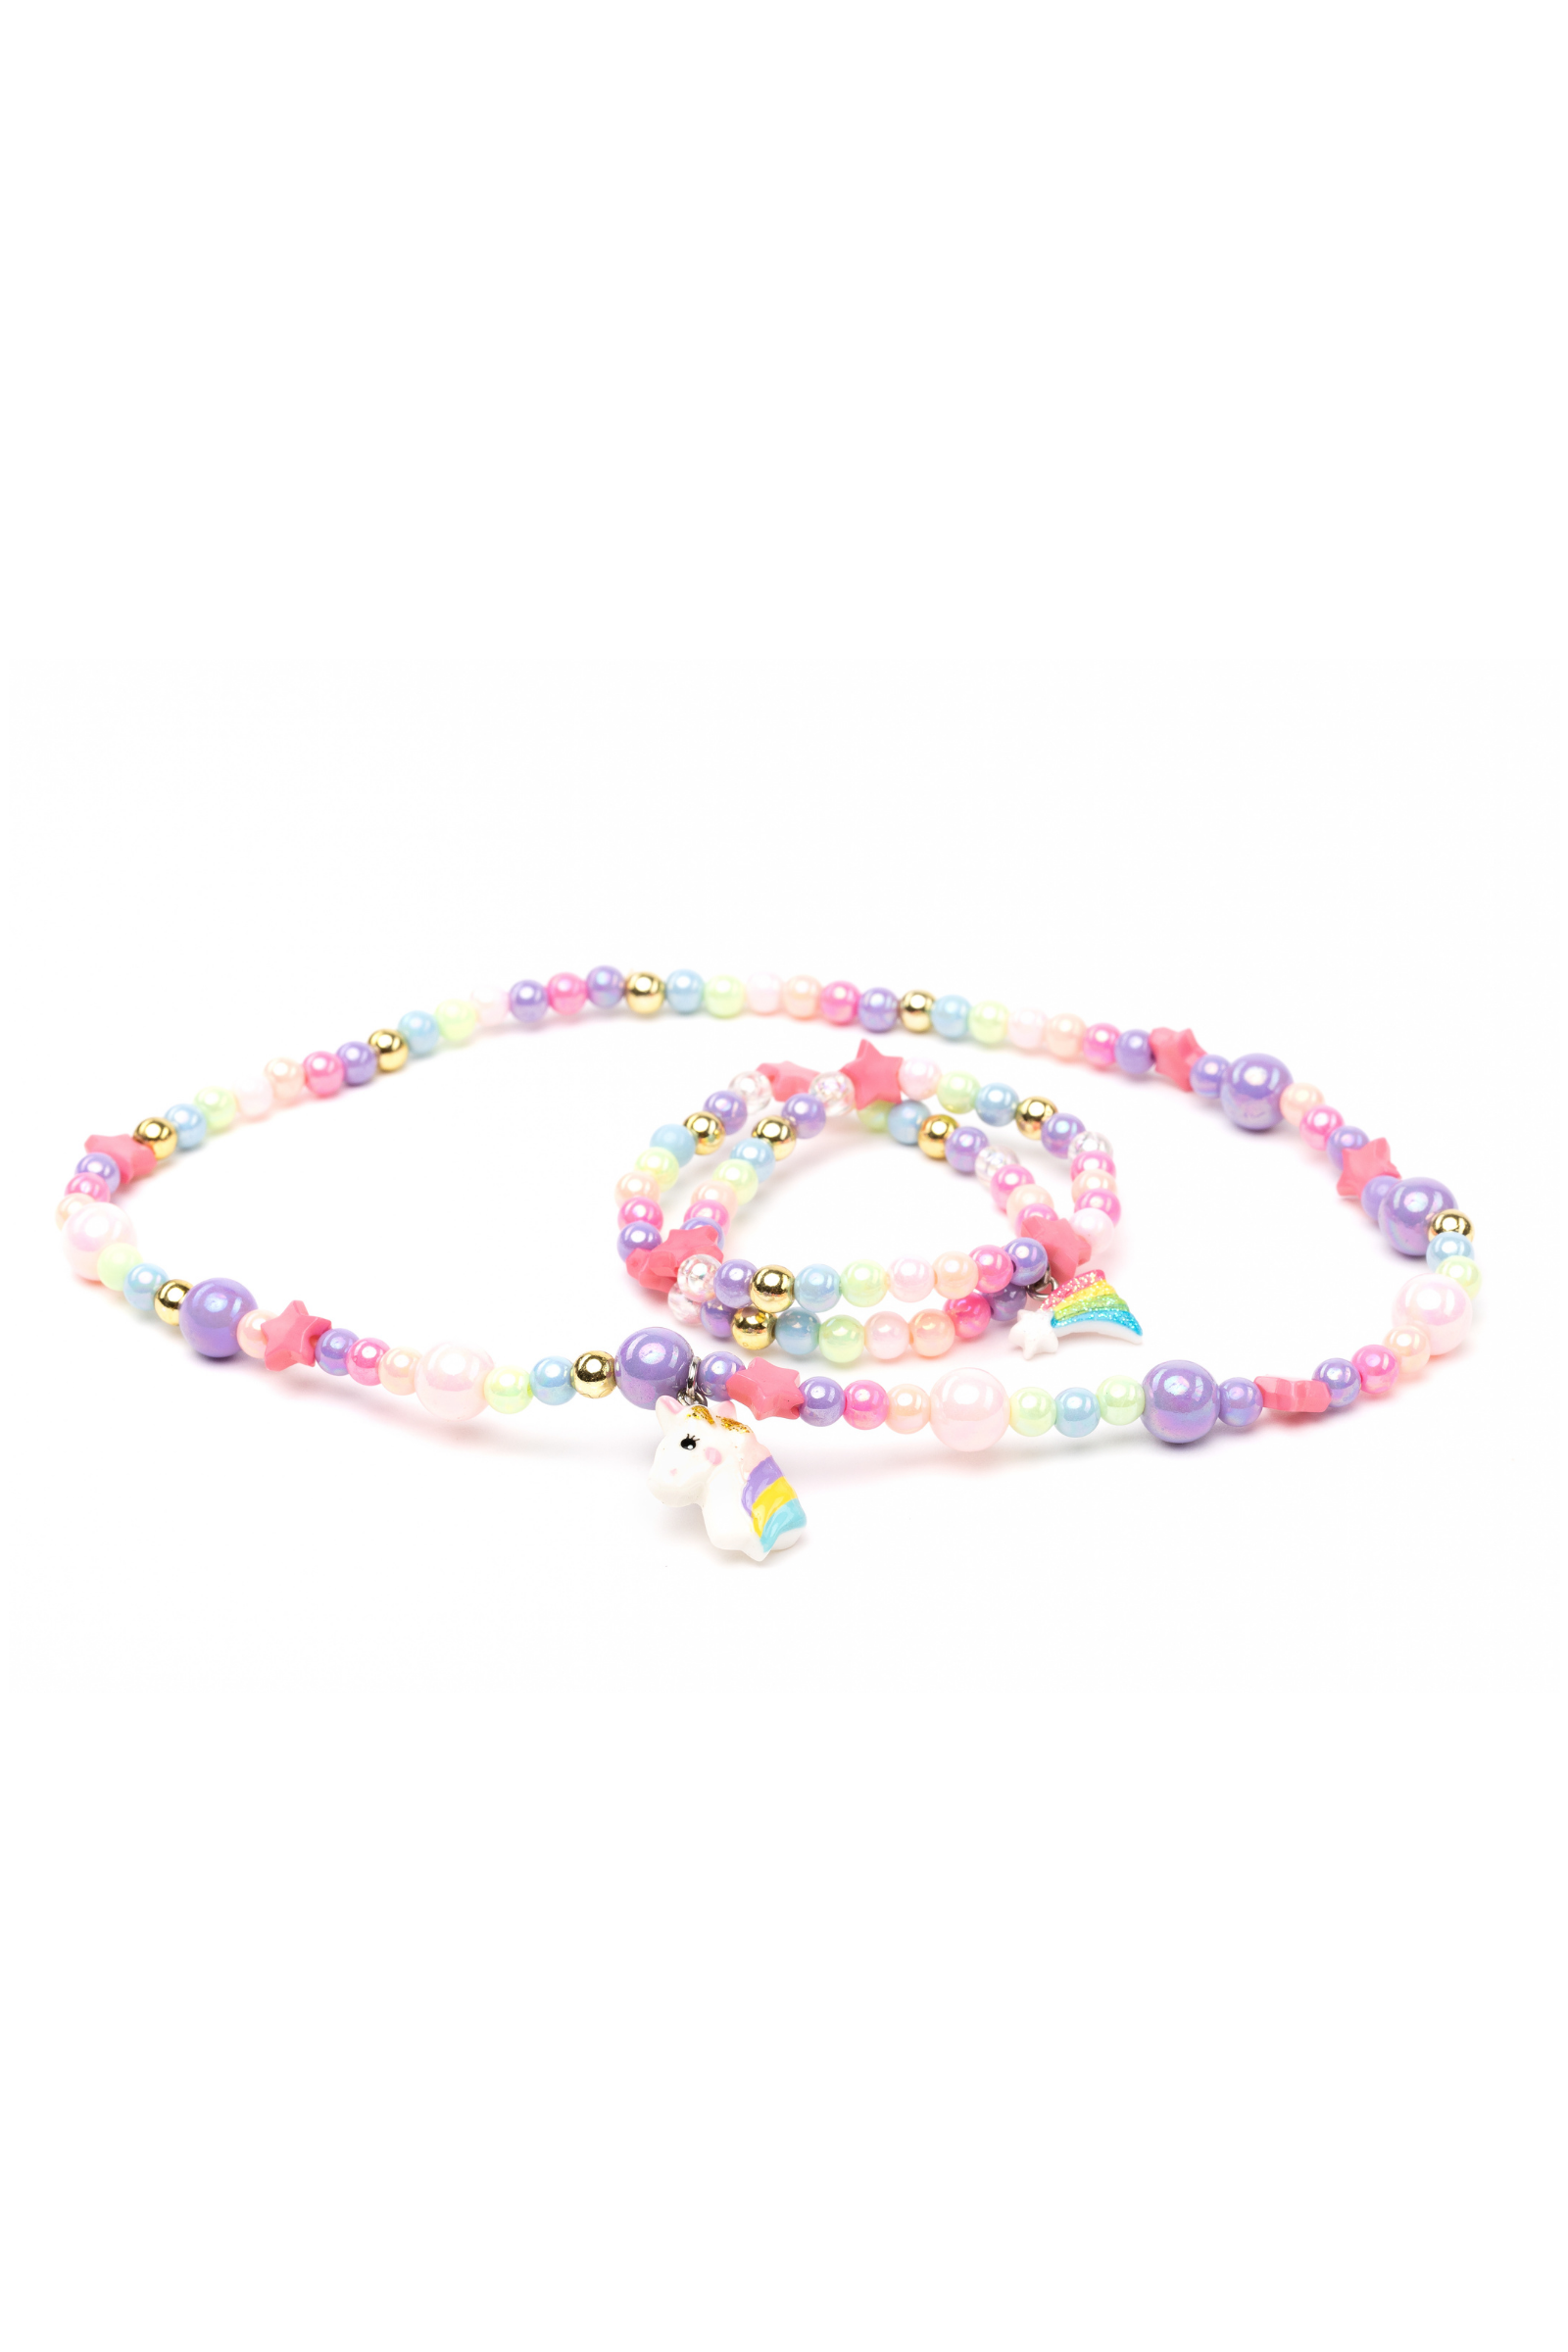 Cheerful Starry Unicorn Necklace Bracelet Set